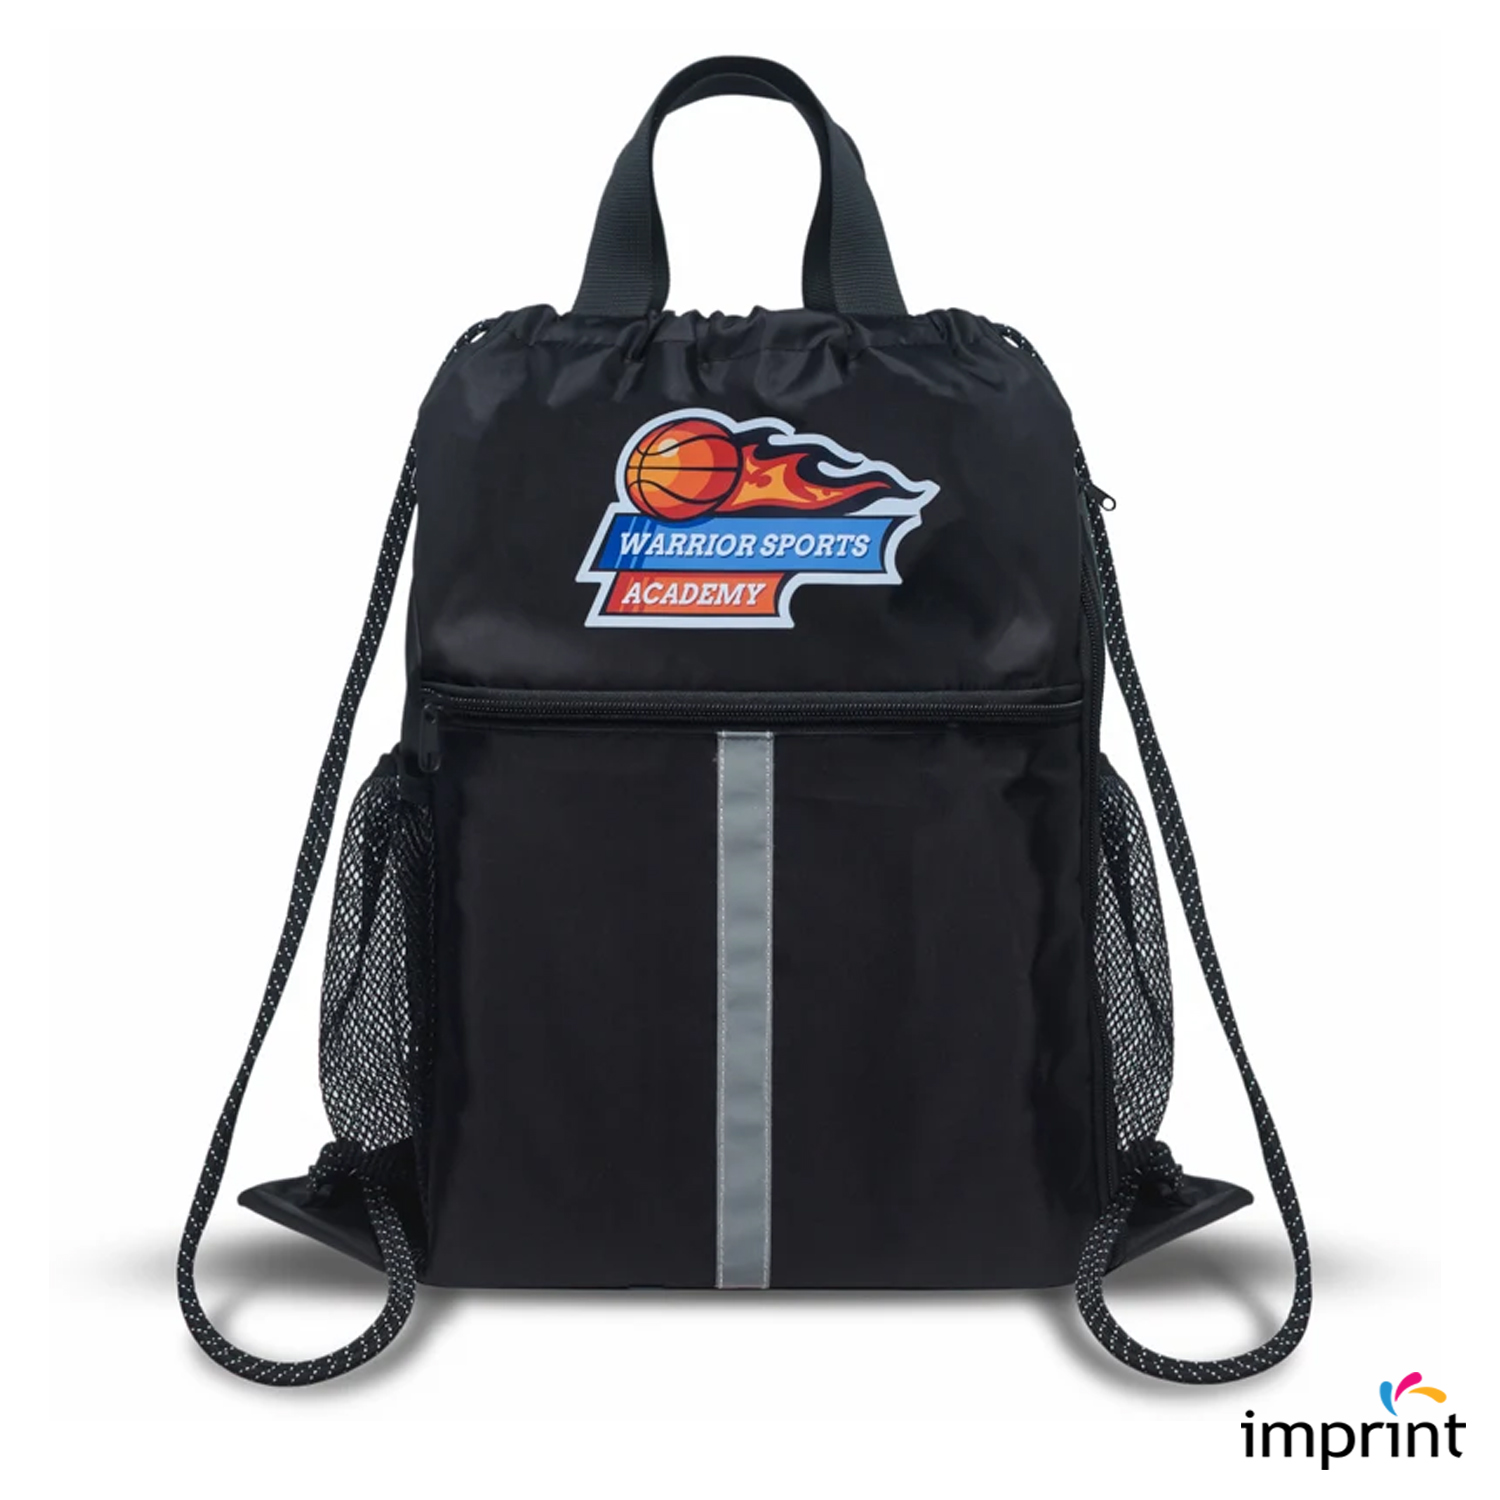 sport gym bag with zipper pocket